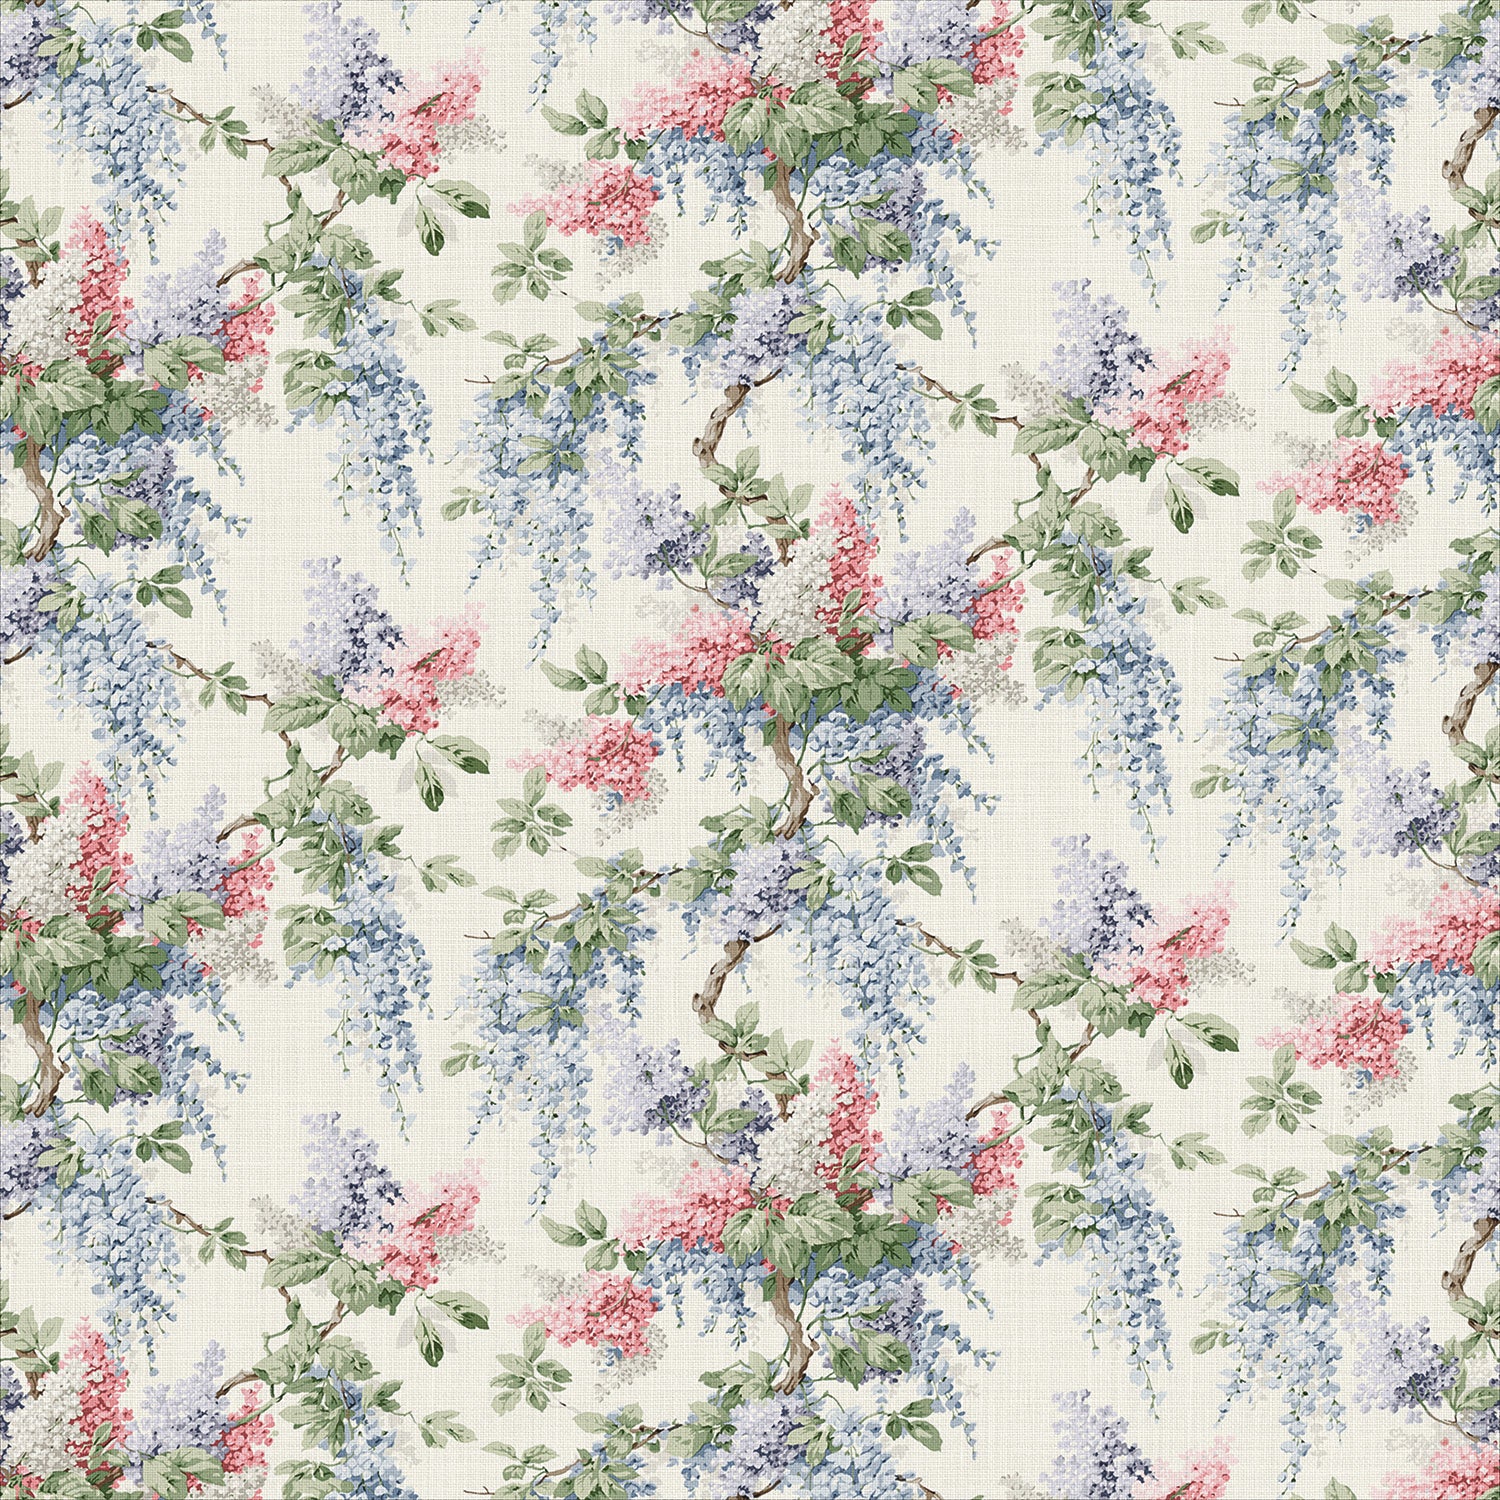 Printed Linen - Floral - Pink/Blue